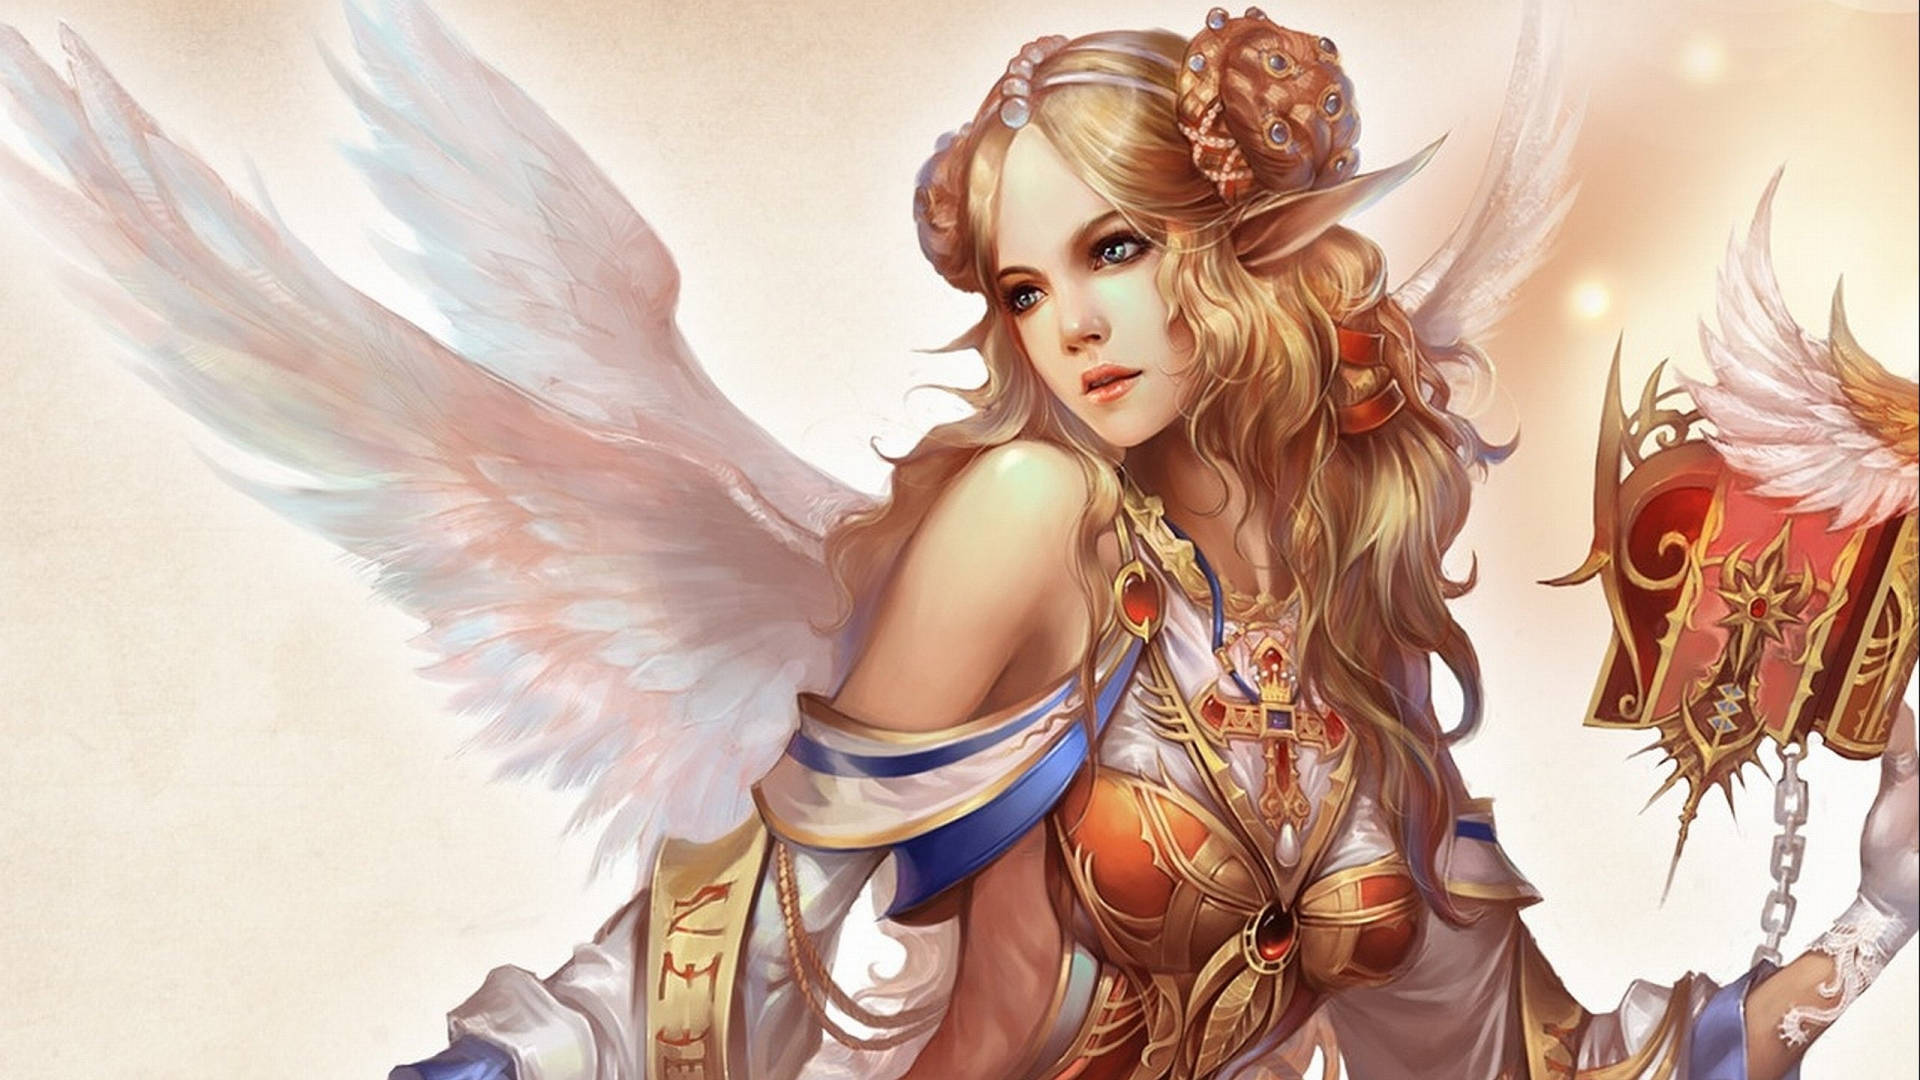 Beautiful Angels With Elf Ears Wallpaper